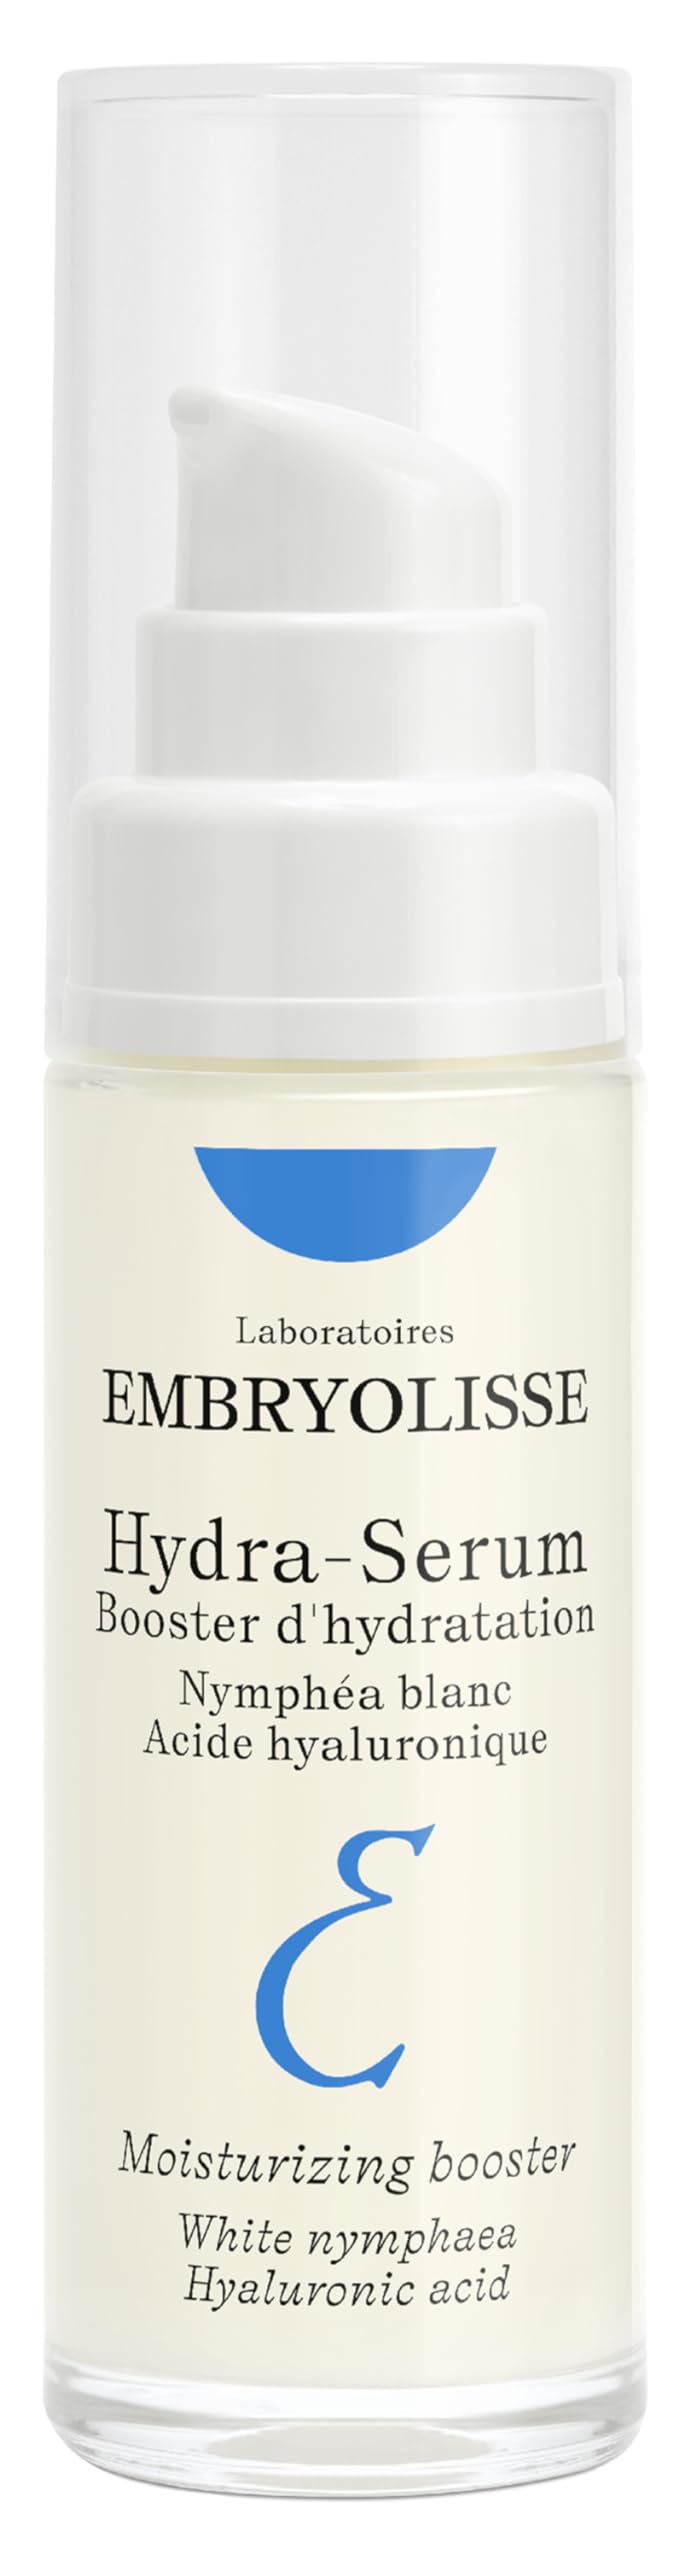 Embryolisse - Hydra Serum Flacon 30 ml